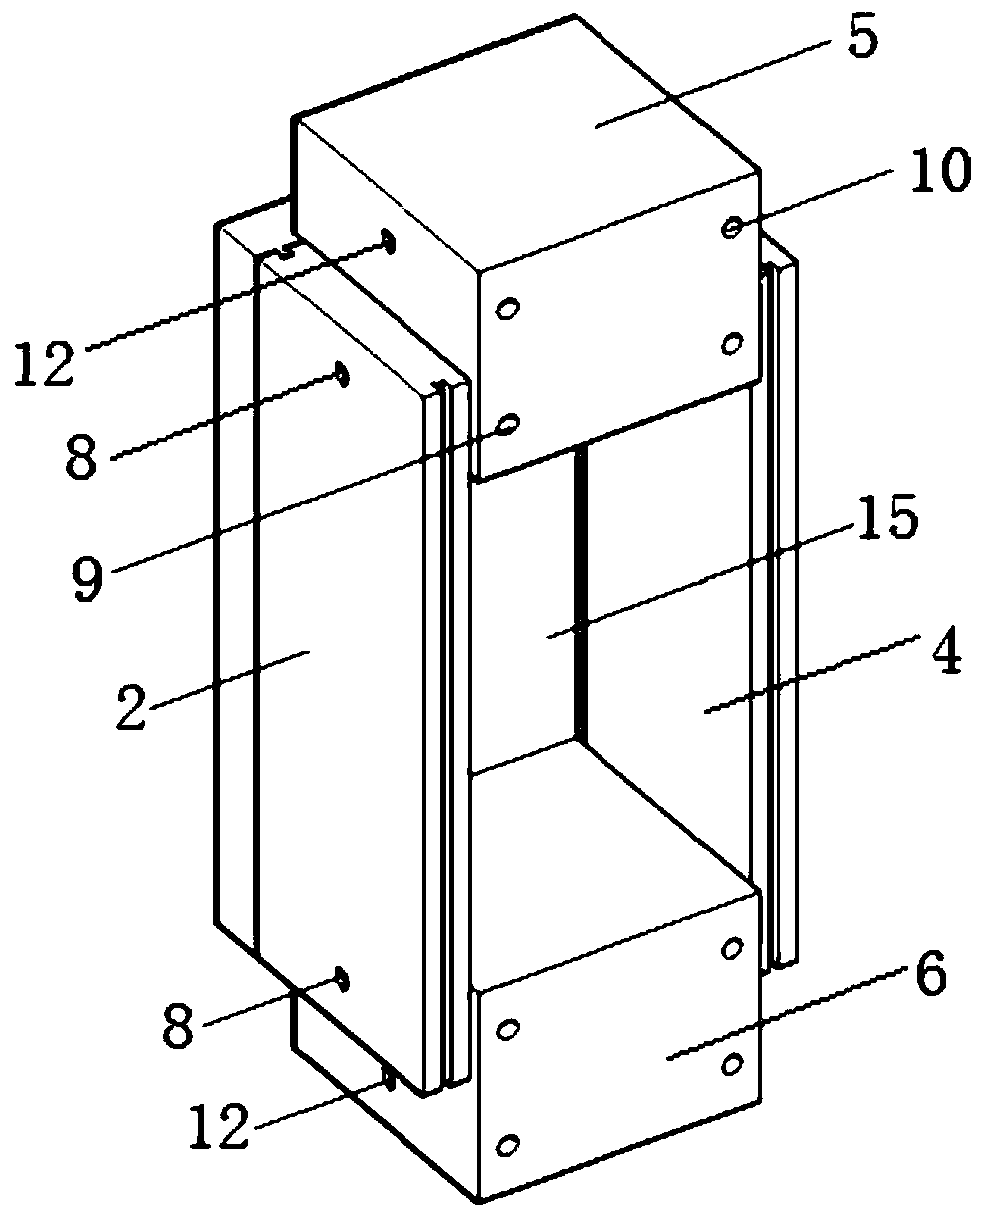 A kit for preparing cuboid columnar jointed rock samples